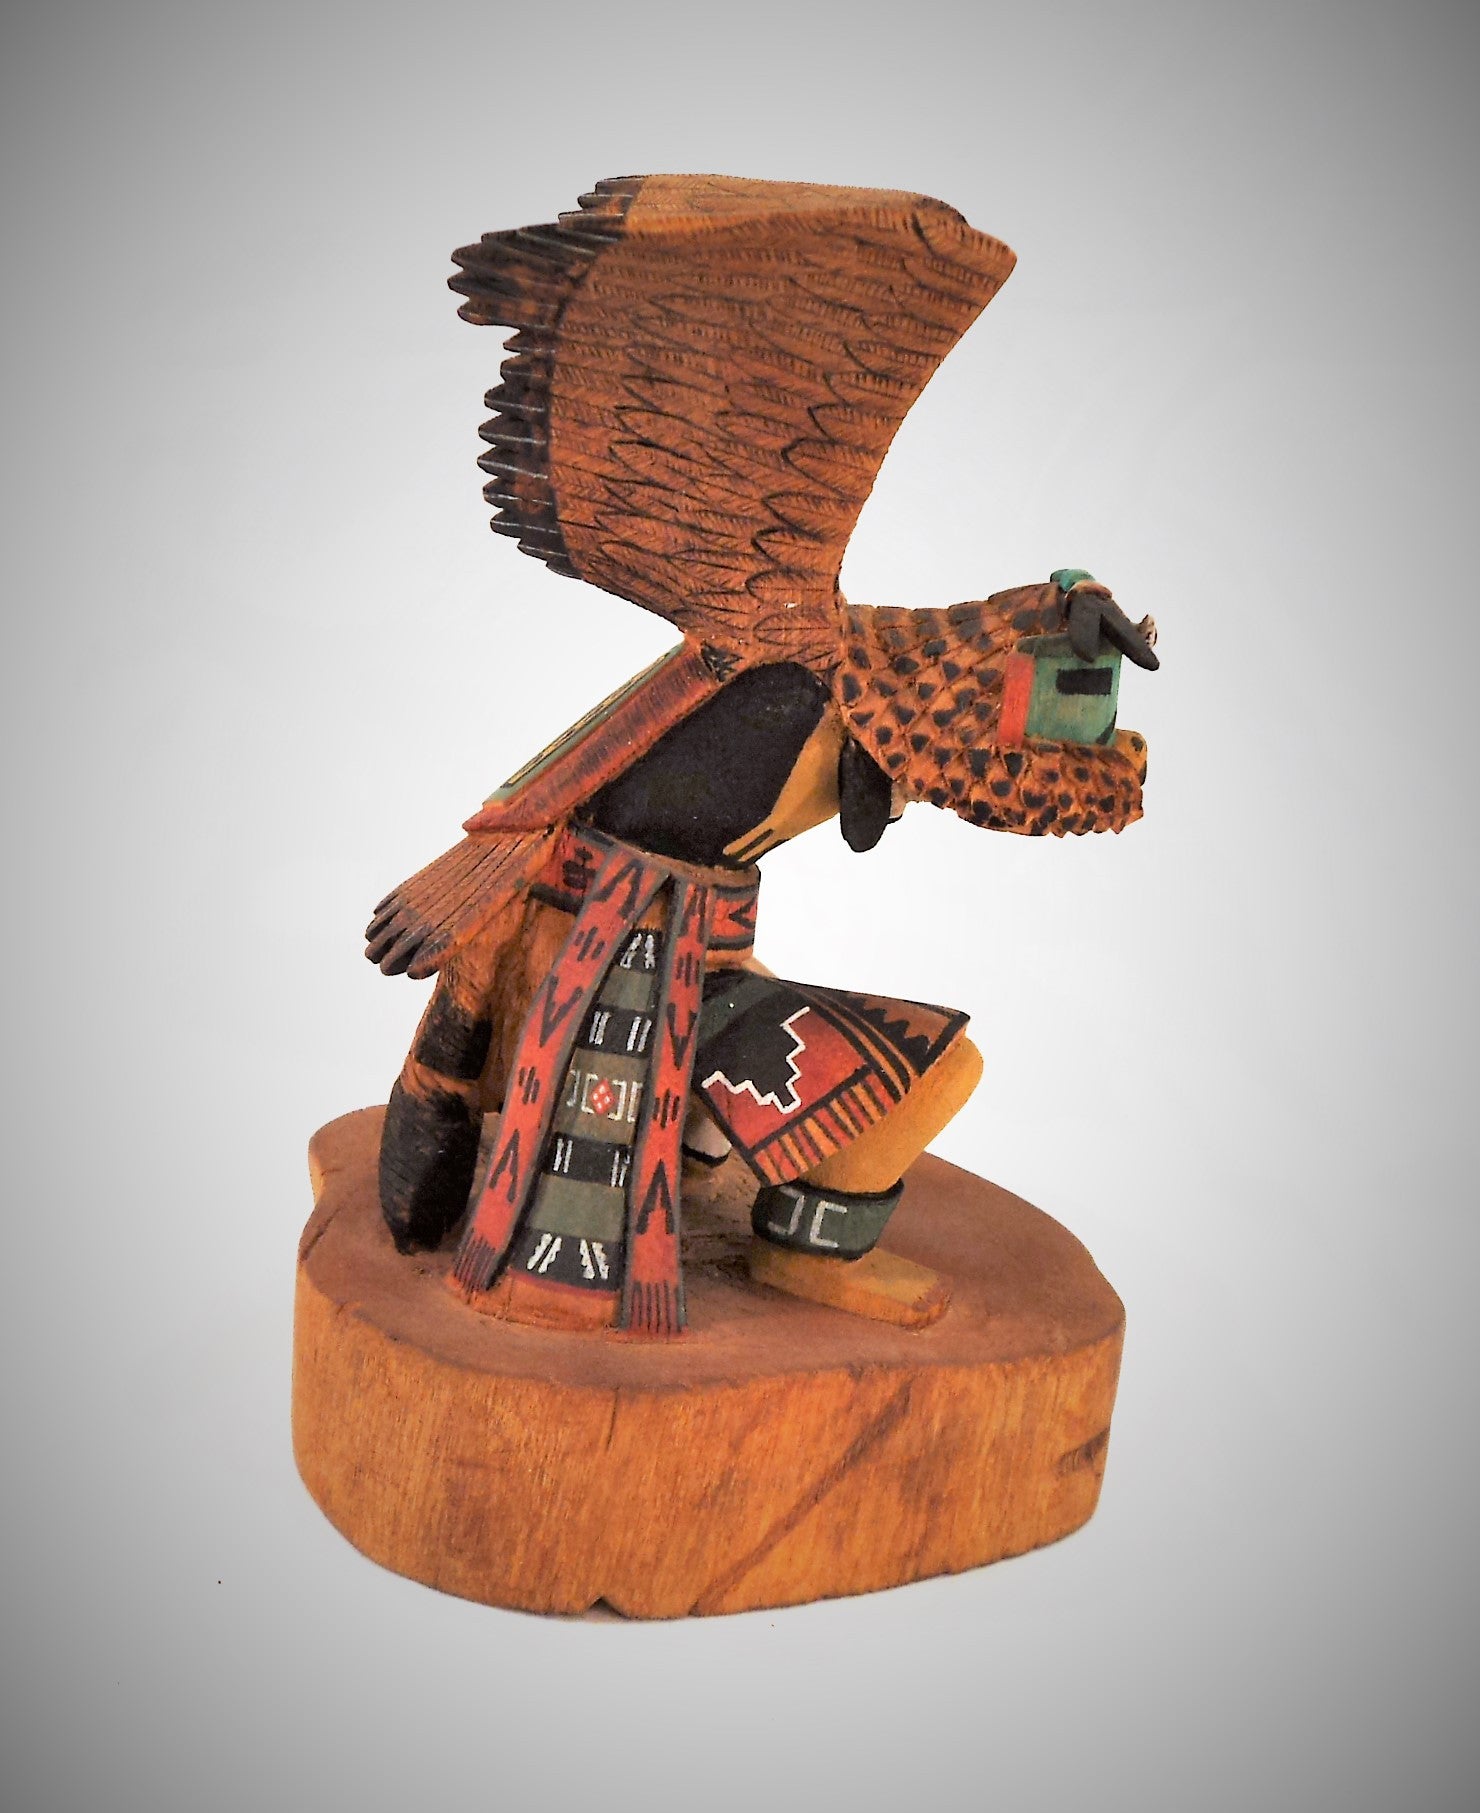 Hopi Kachina Doll Signed by Calton Harvey